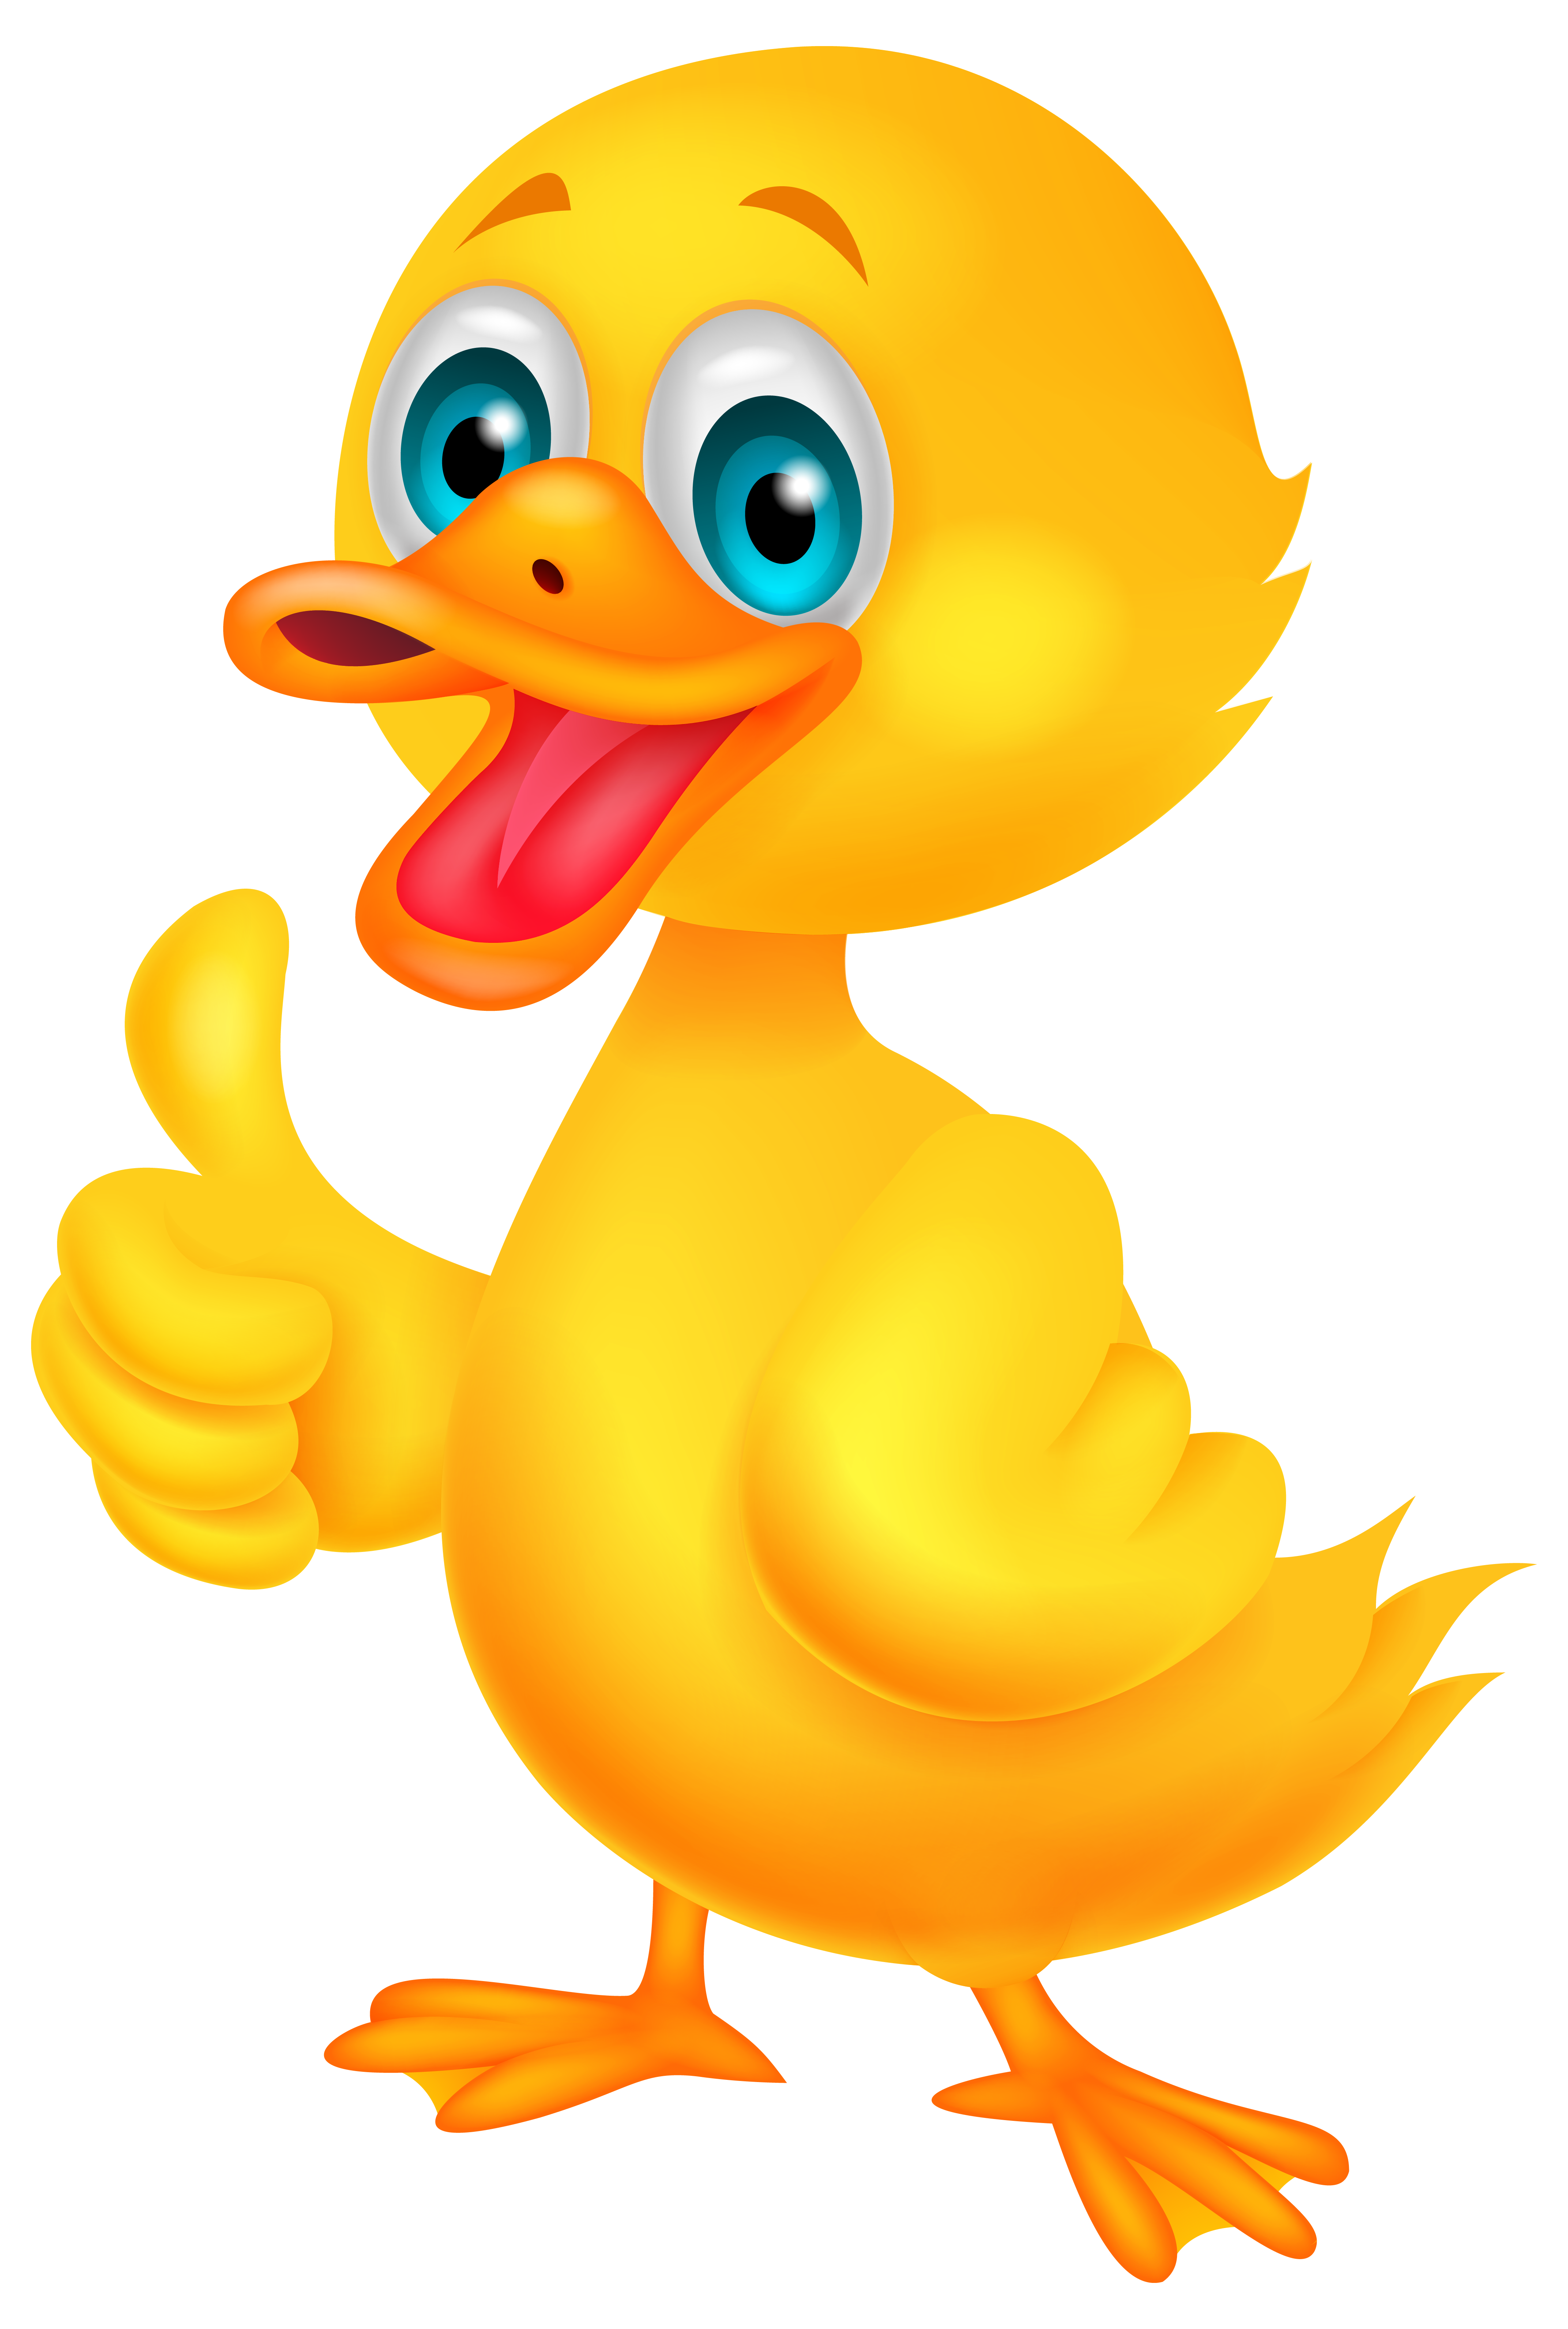 Duck toy animal yellow. Kite clipart cartoon character